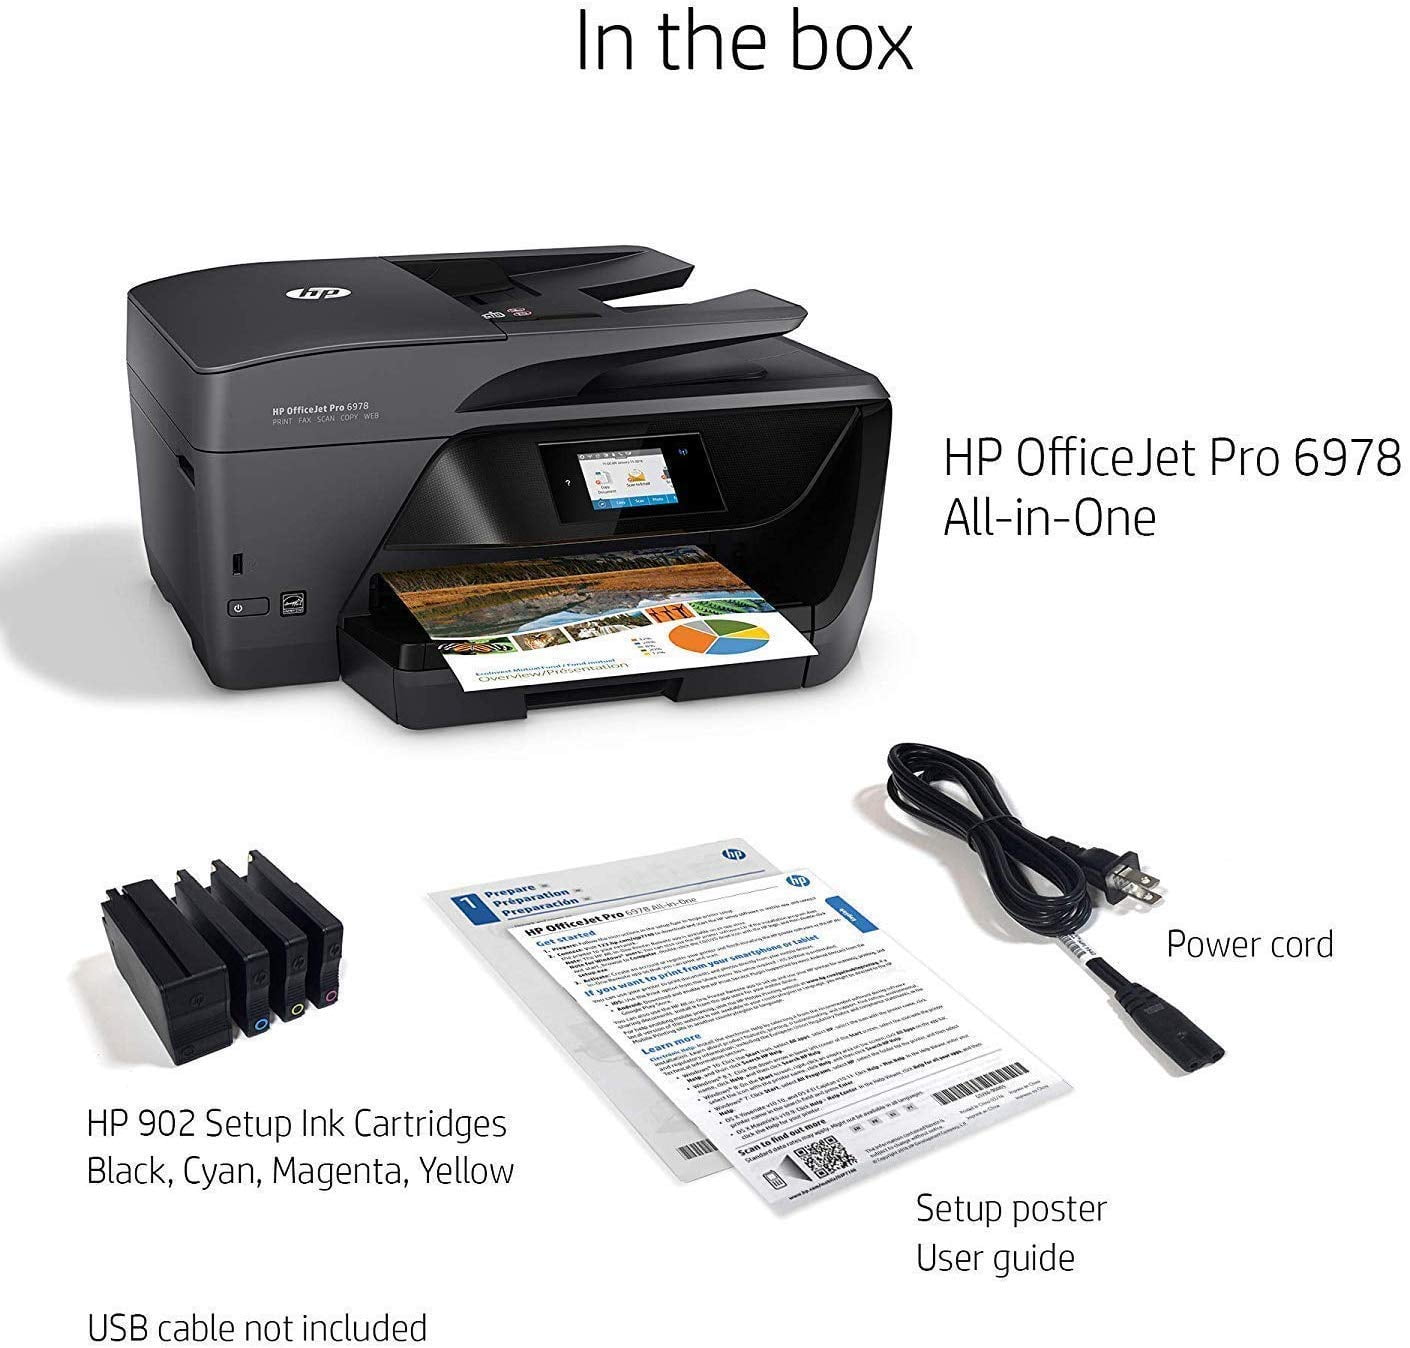 Cartouhes HP OfficeJet Pro 6970 pas cher - k2print